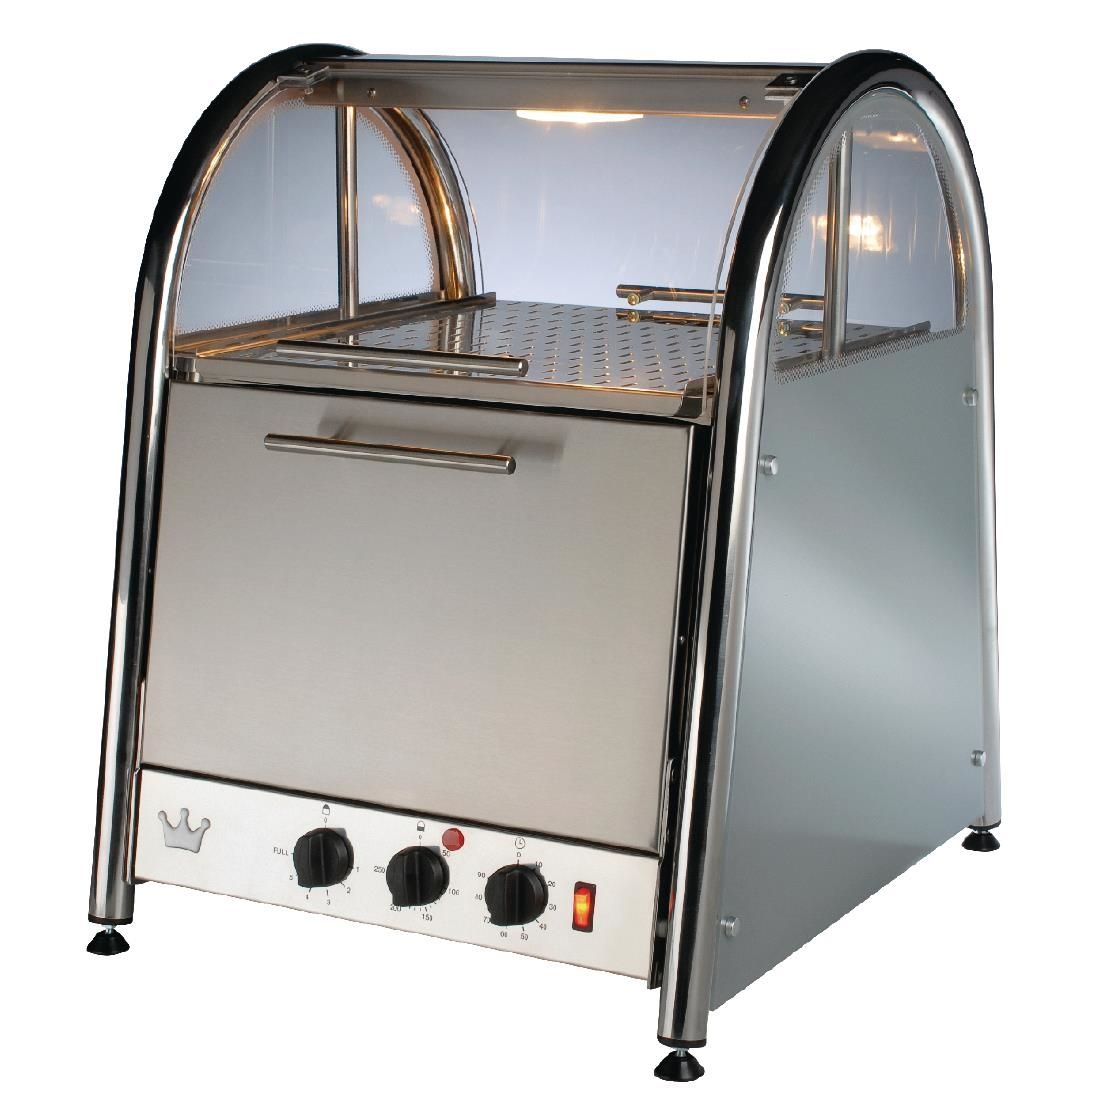 CF579 King Edward Bake and Display Potato Oven VISTA60 JD Catering Equipment Solutions Ltd